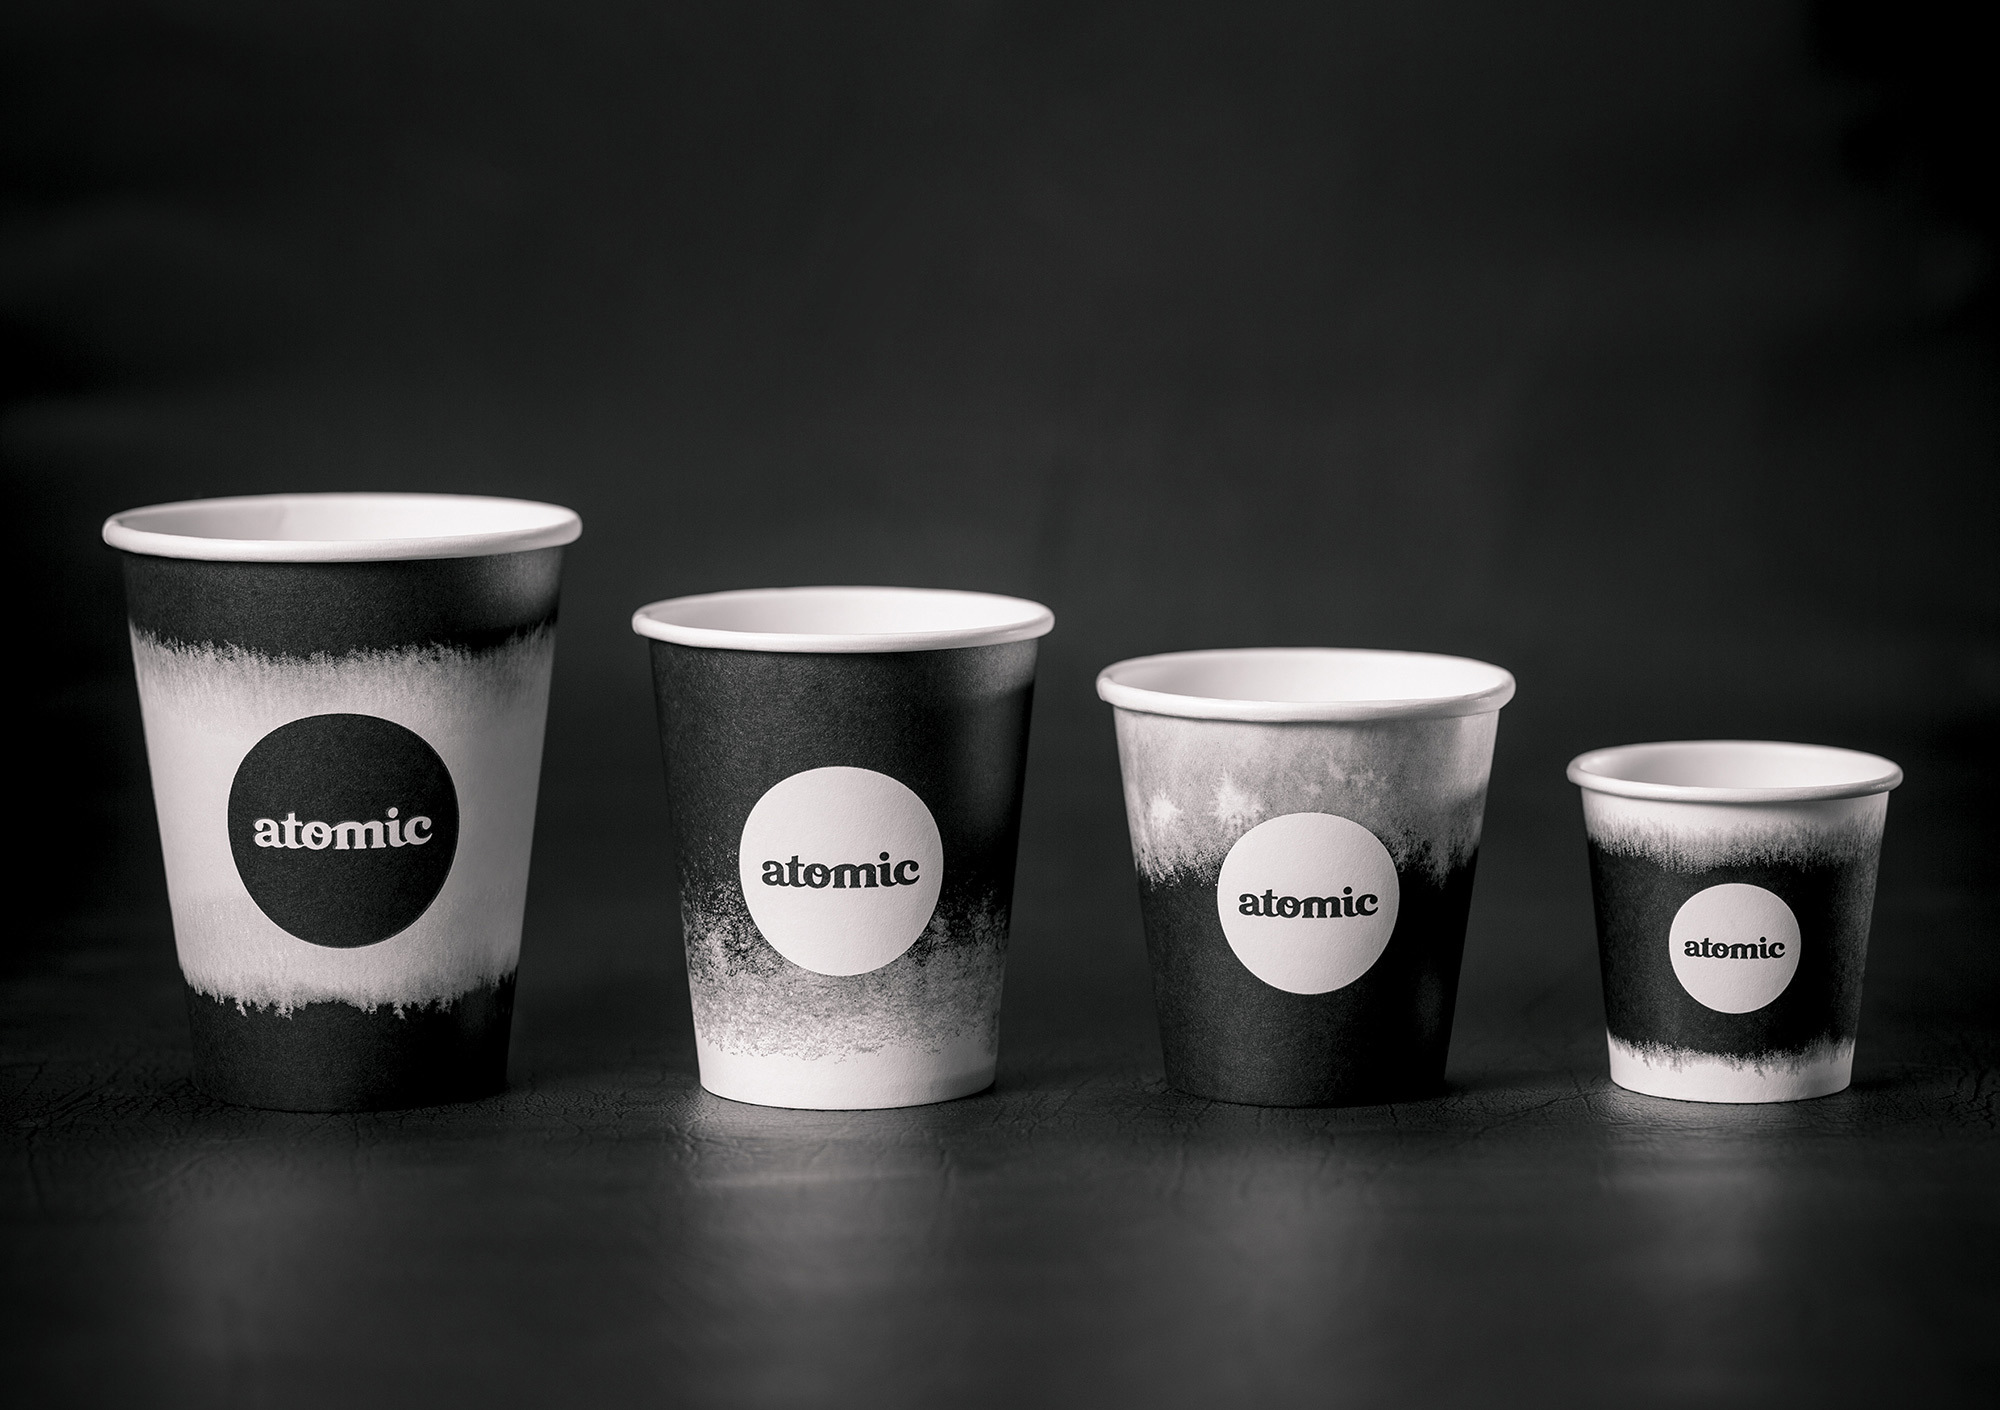 atomic coffee energy drink flavors